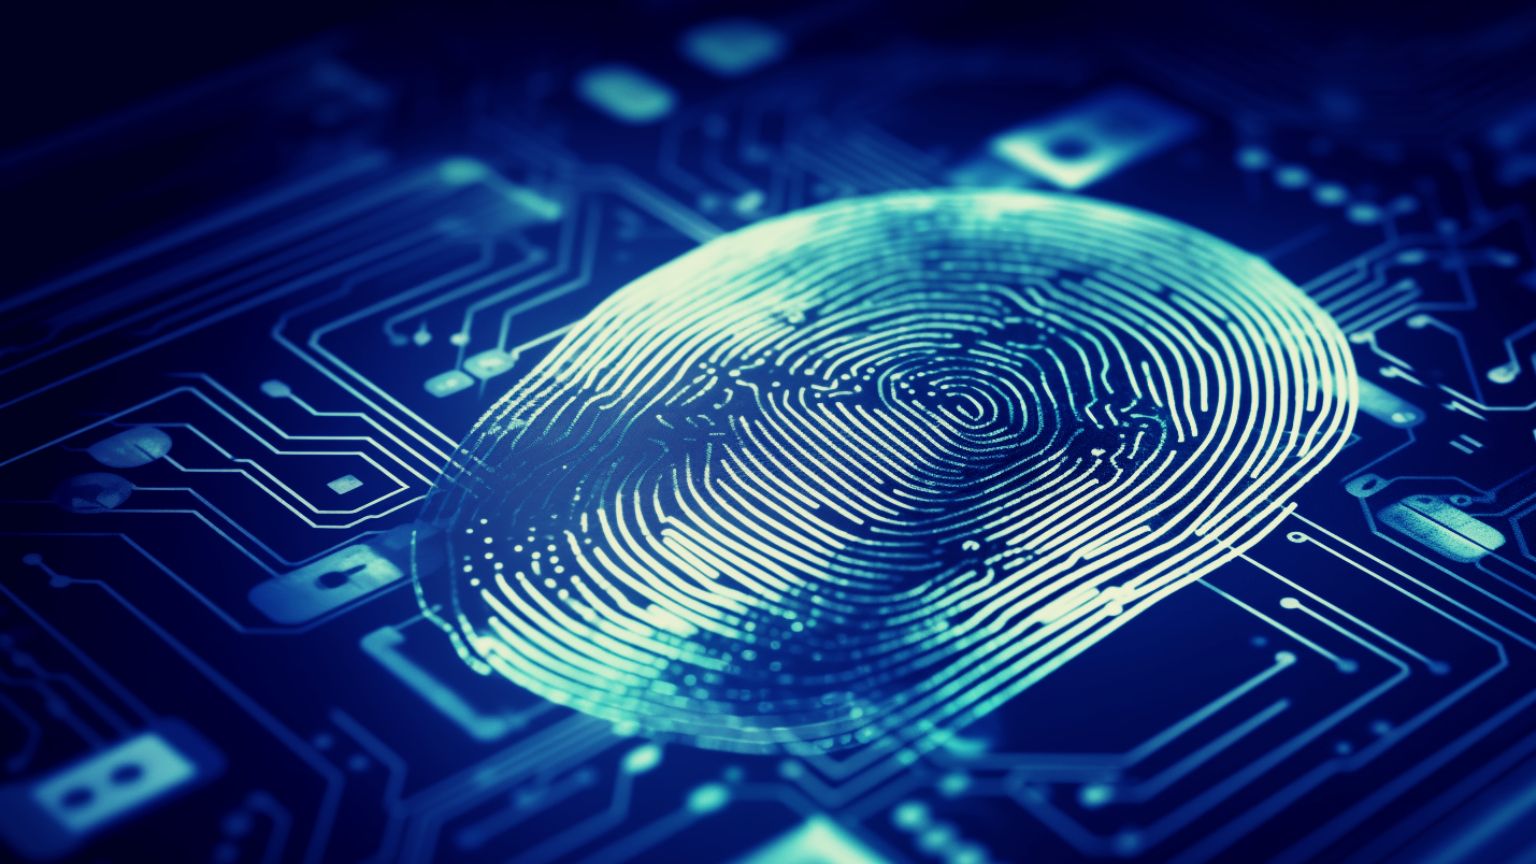 Biometric ID Company Boasts About Joining The World Economic Forum